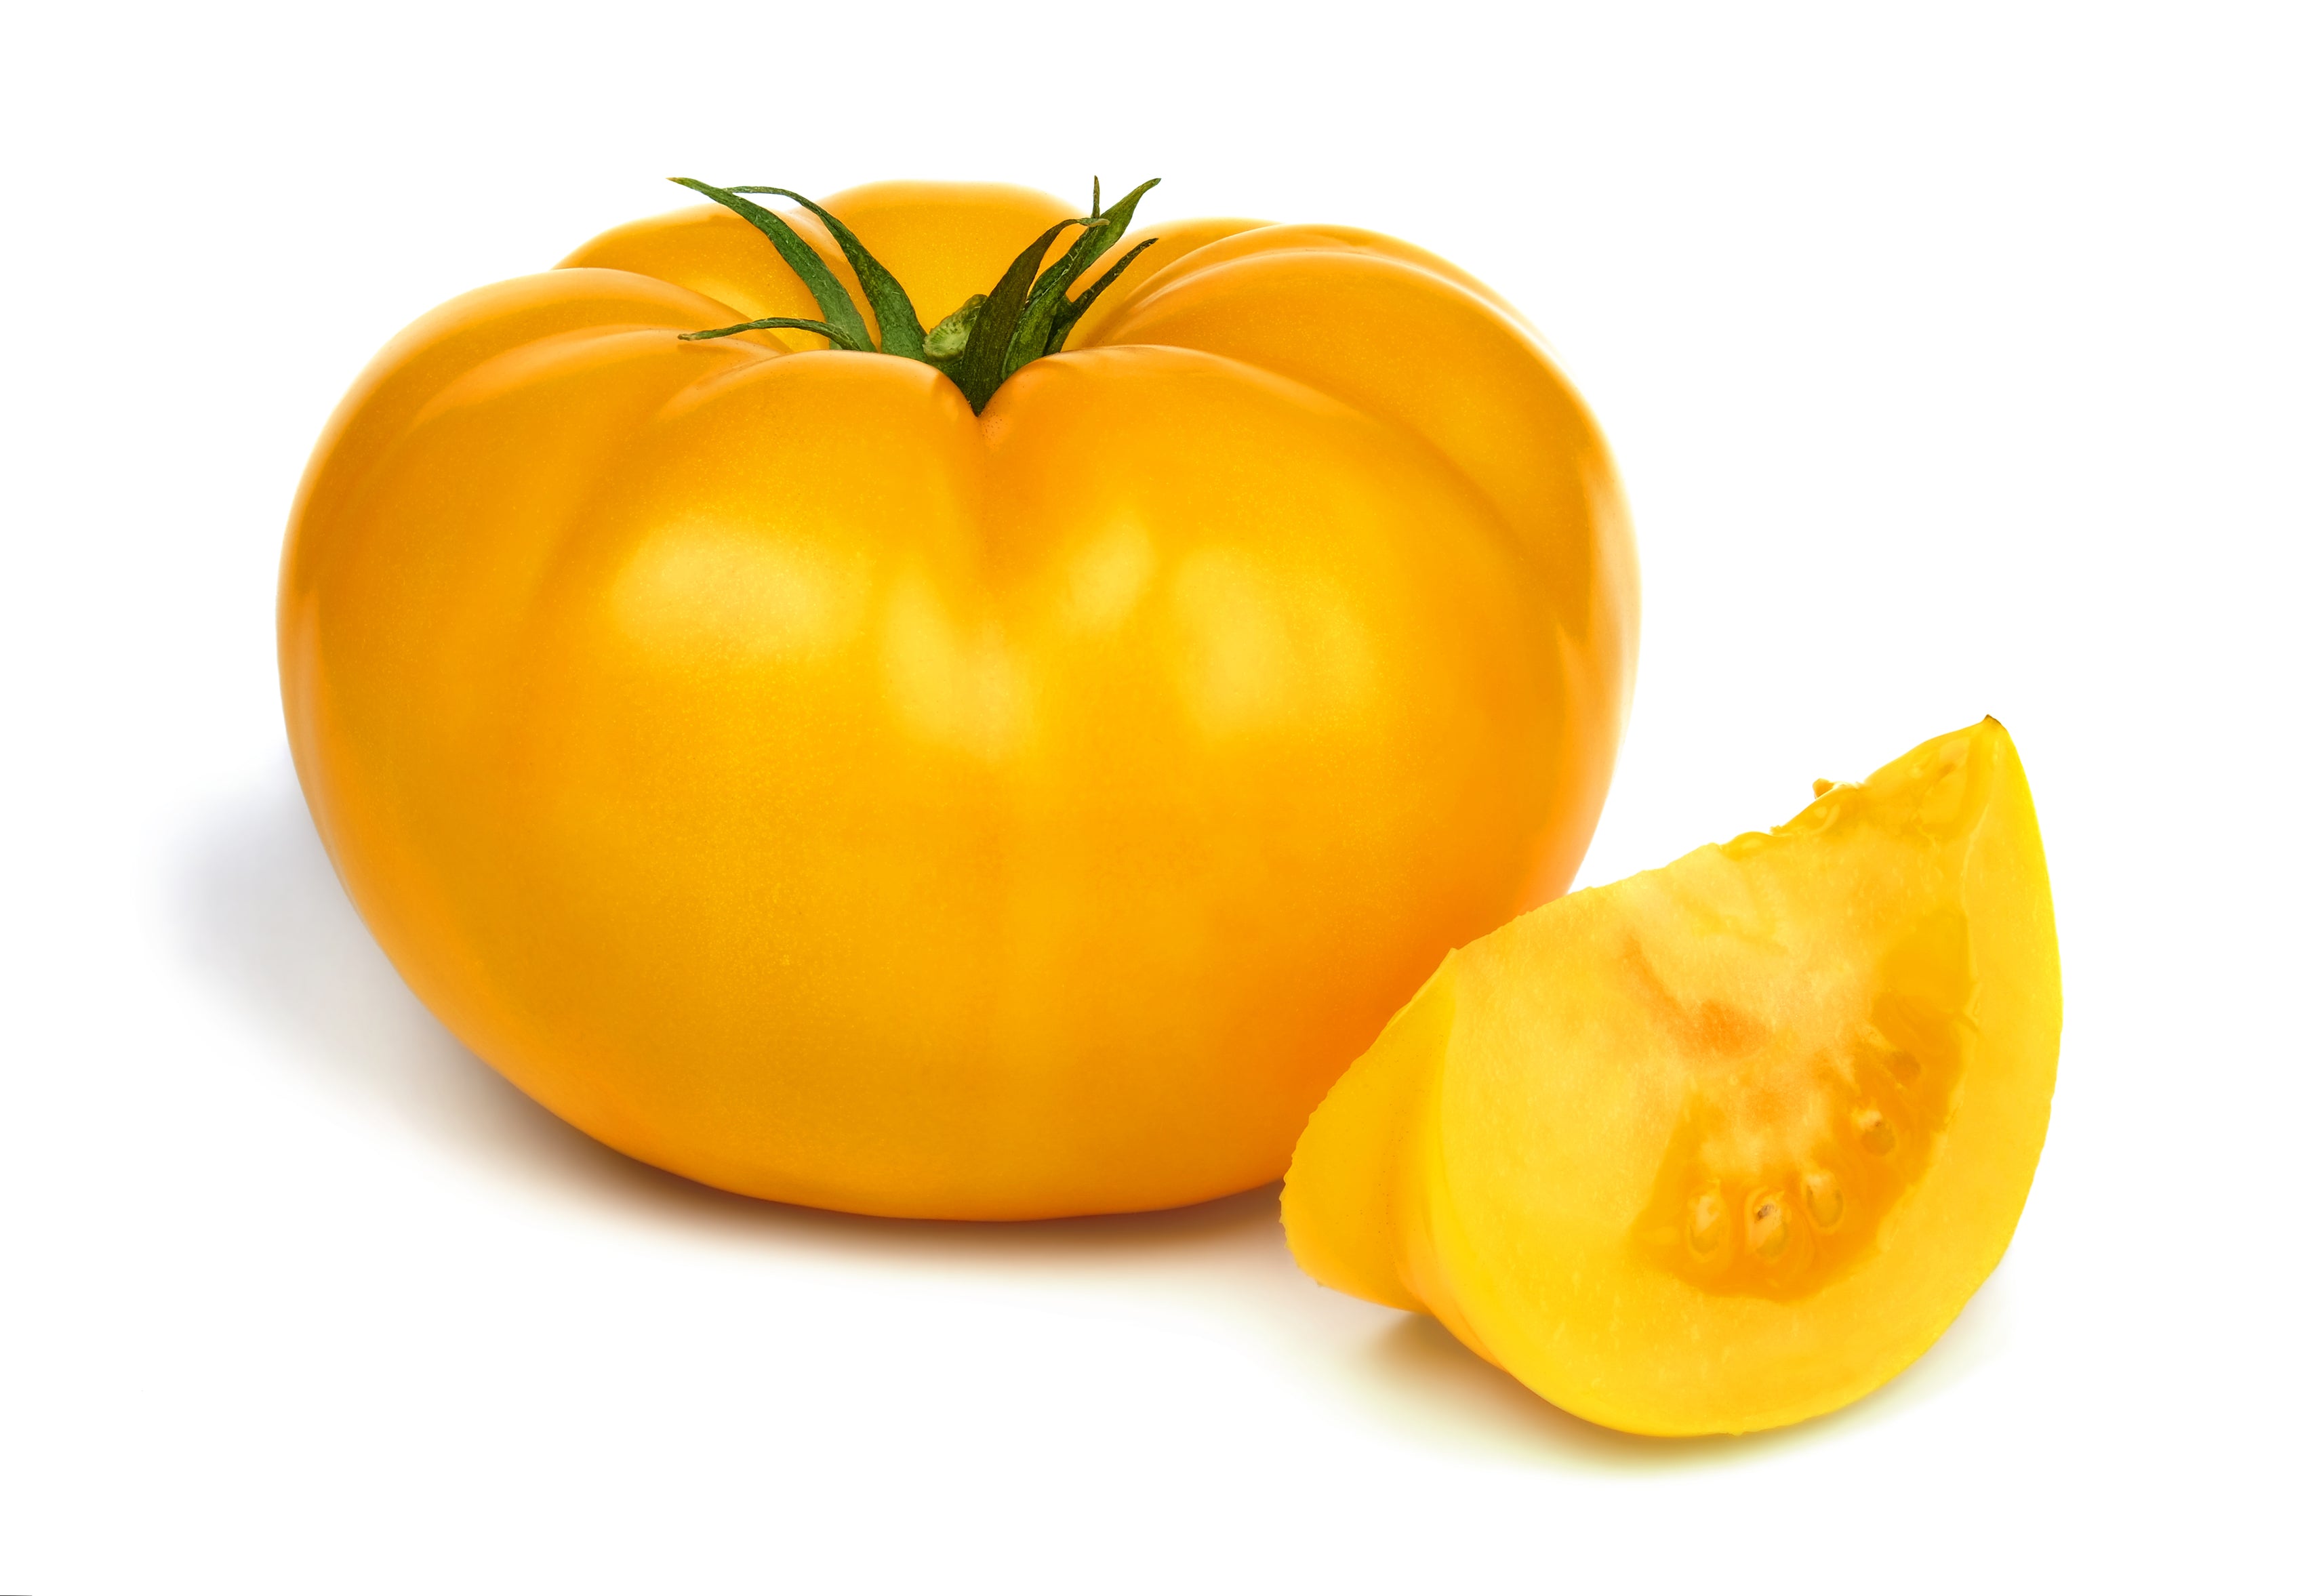 Yellow Brandywine Tomato